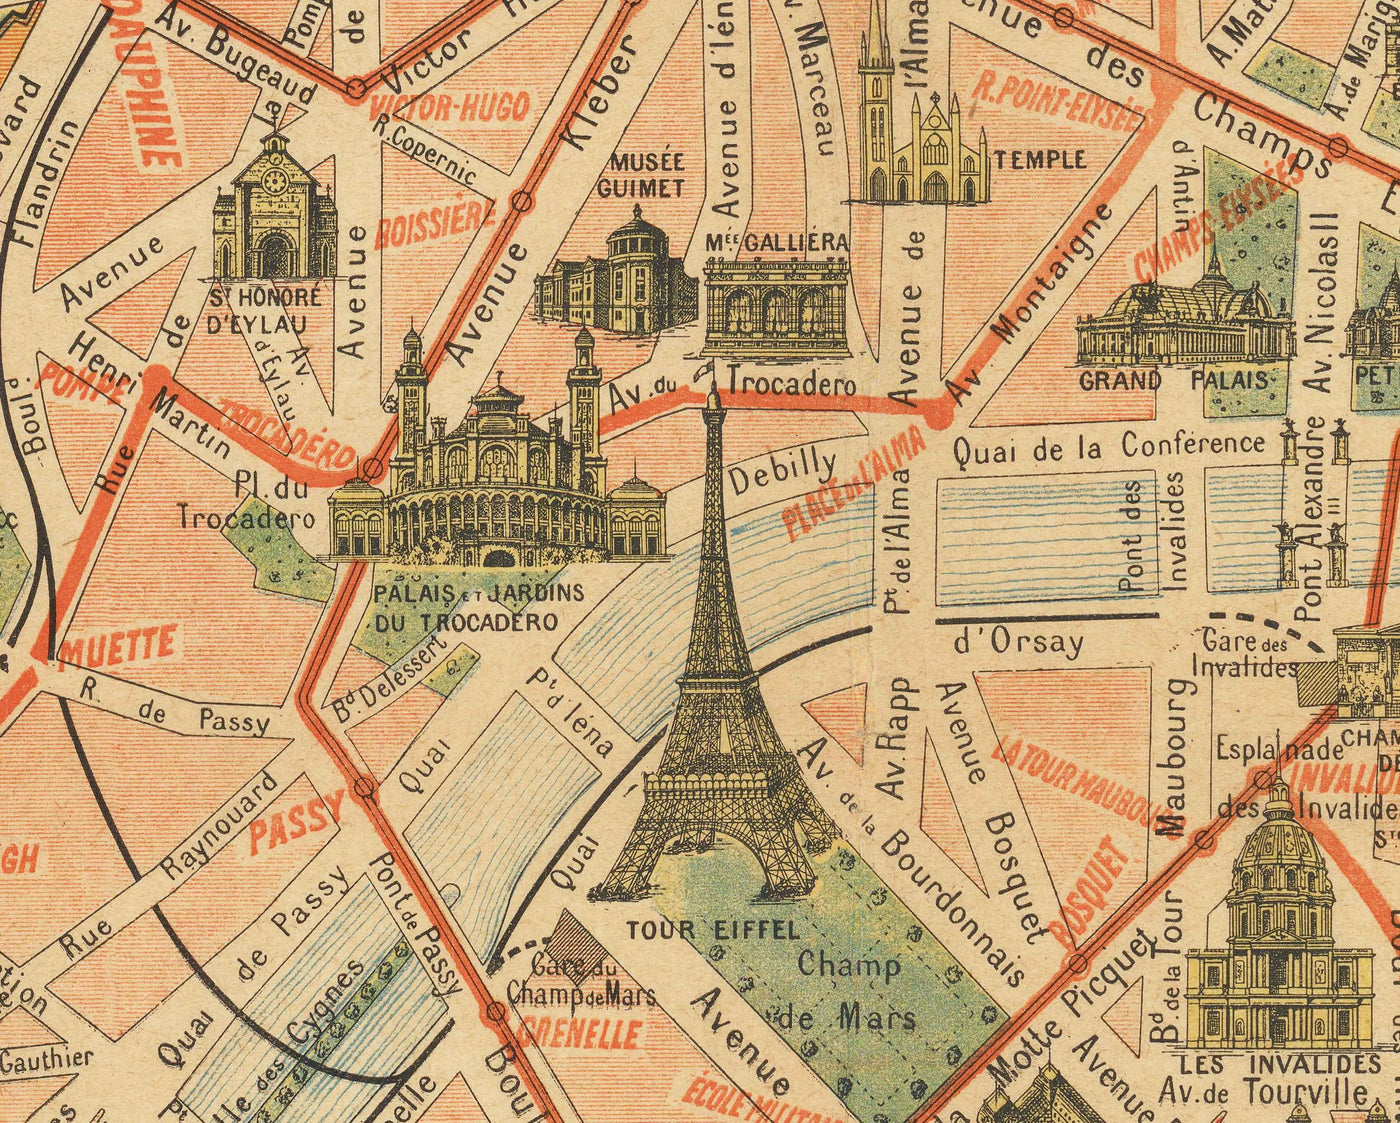 Old Map of Paris Métro & Landmarks, 1920 by Robelin - Eiffel Tower, Louvre, Champs-Elysees, Railway Subway Chart